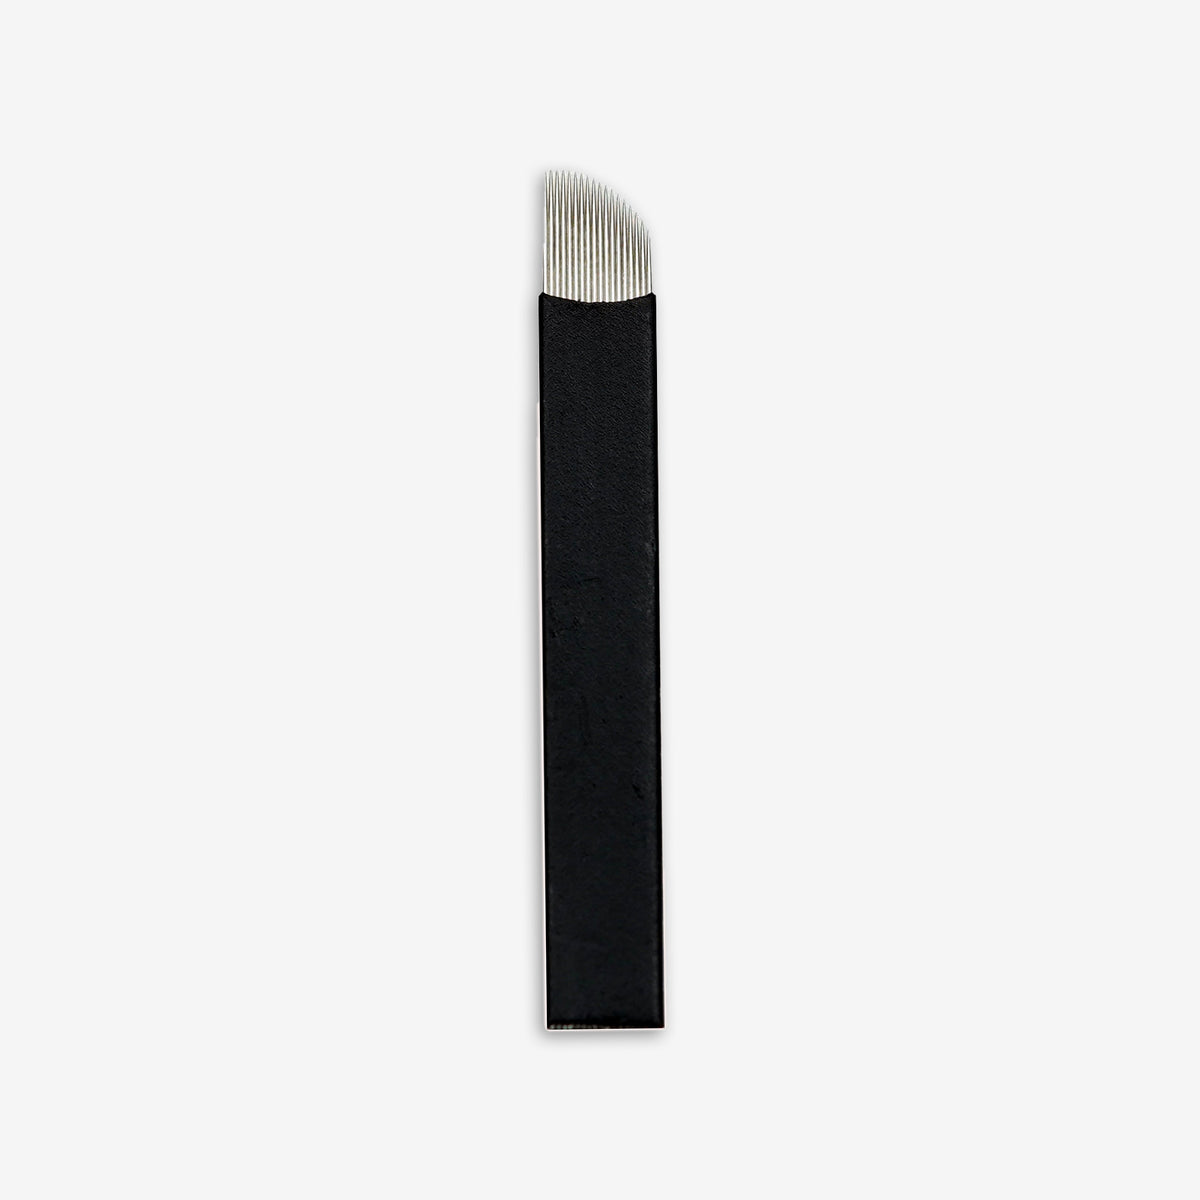 Biomaser Super Black Disposable Microblading permanent makeup Needles 20pcs